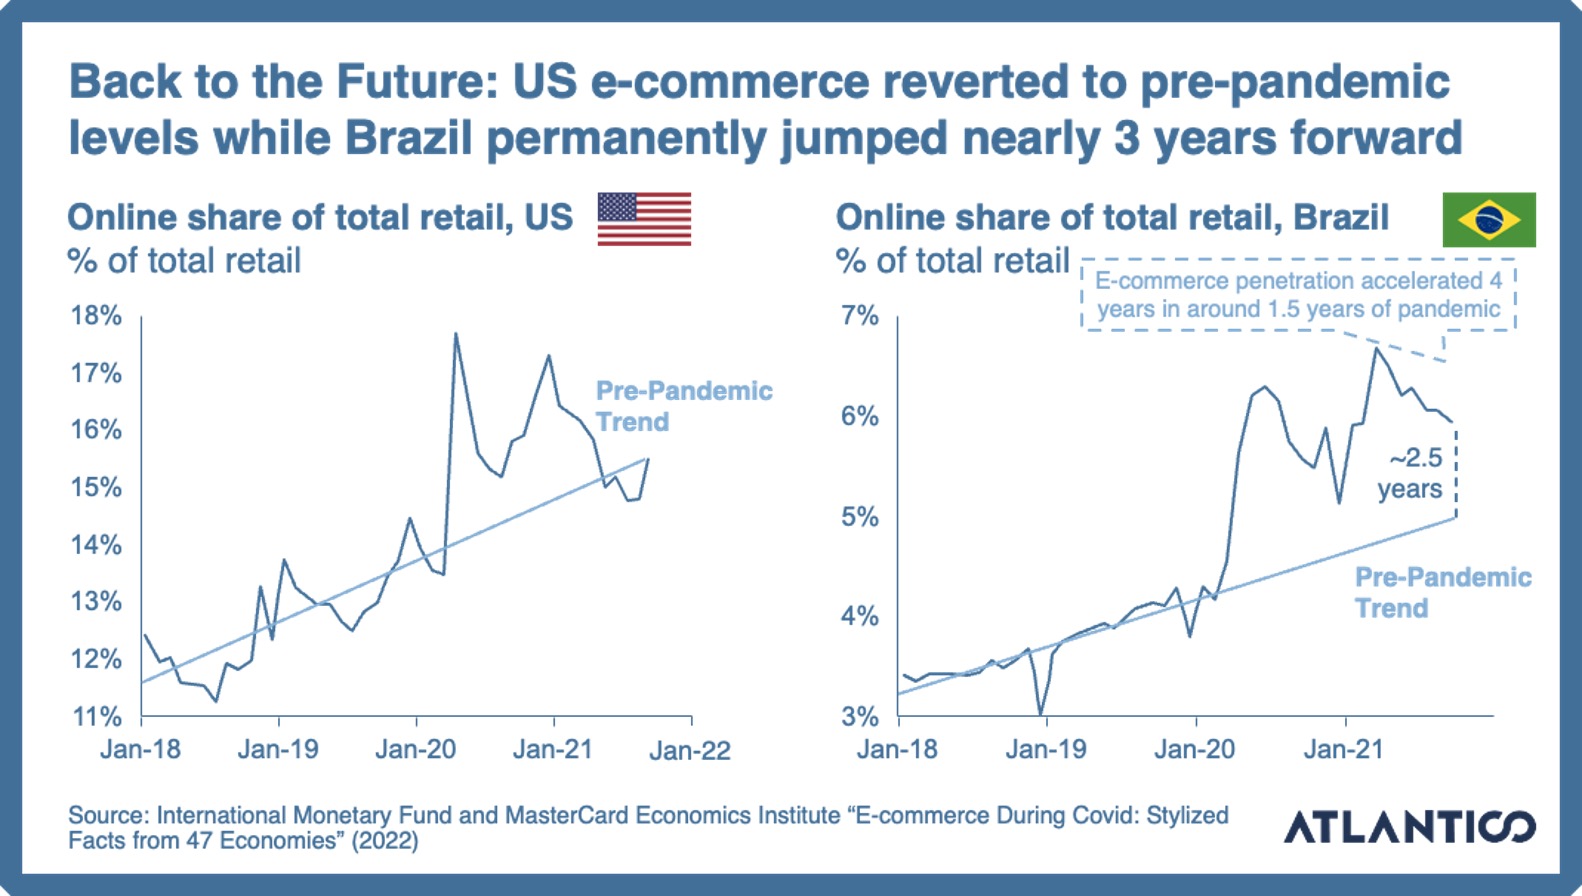 Online share of retail vs. pre-pandemic trend, US vs. Brazil. 